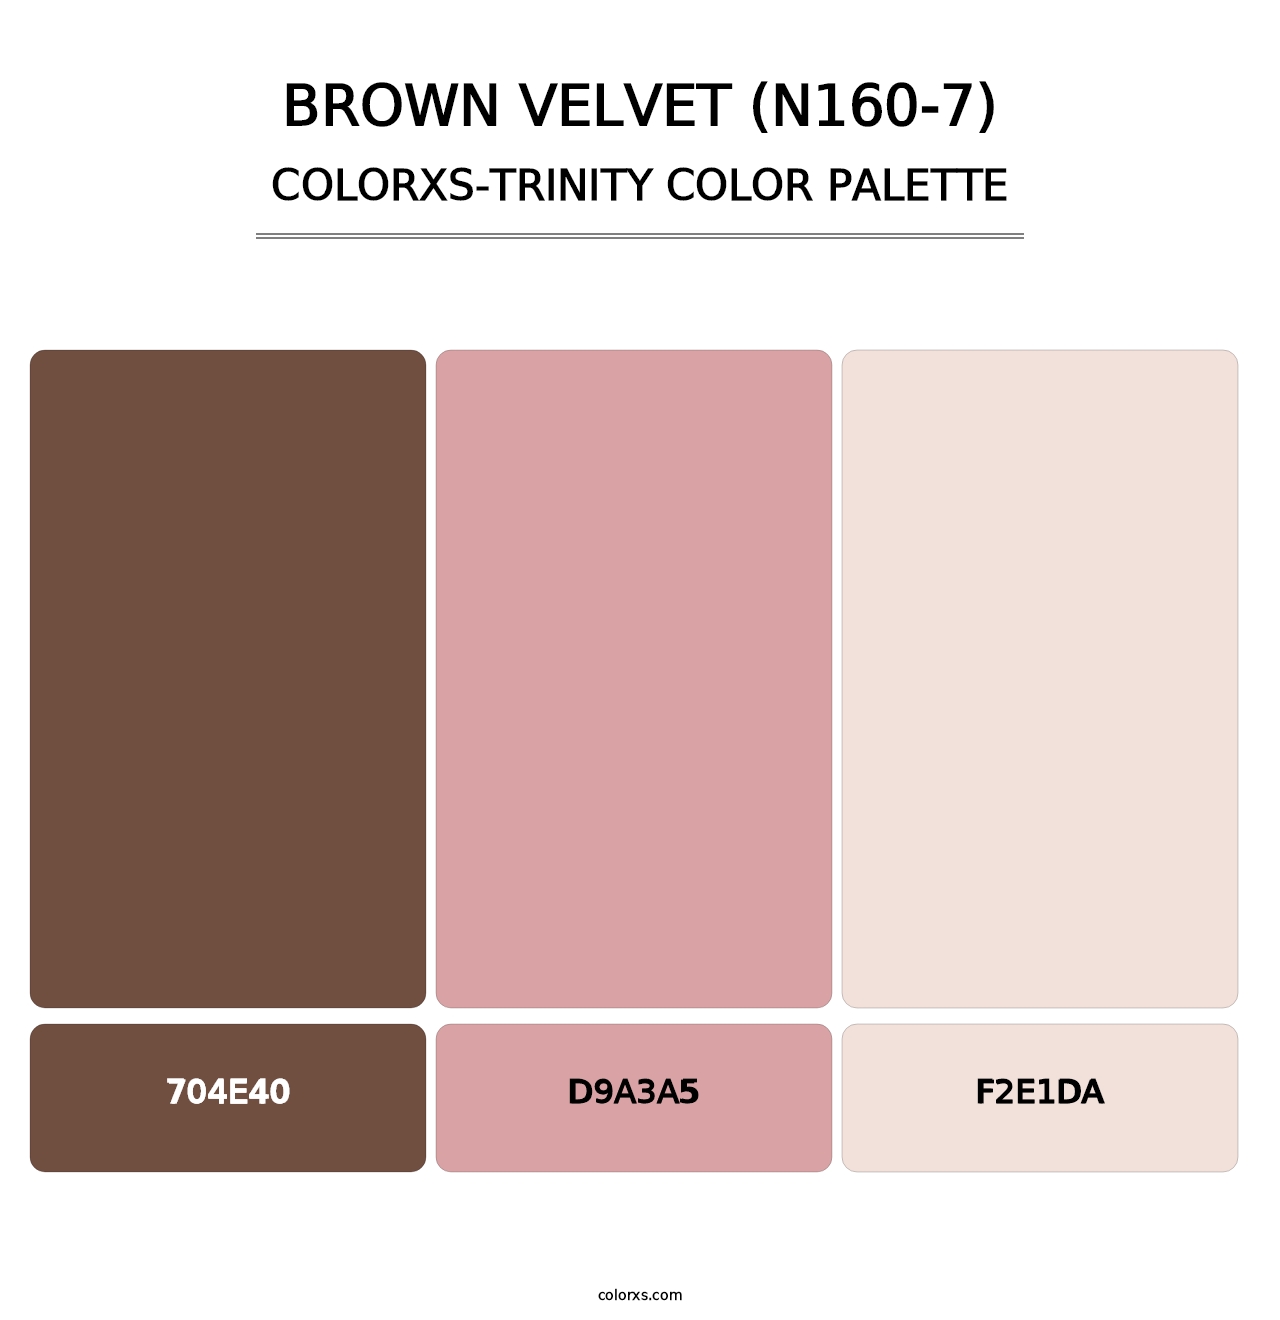 Brown Velvet (N160-7) - Colorxs Trinity Palette